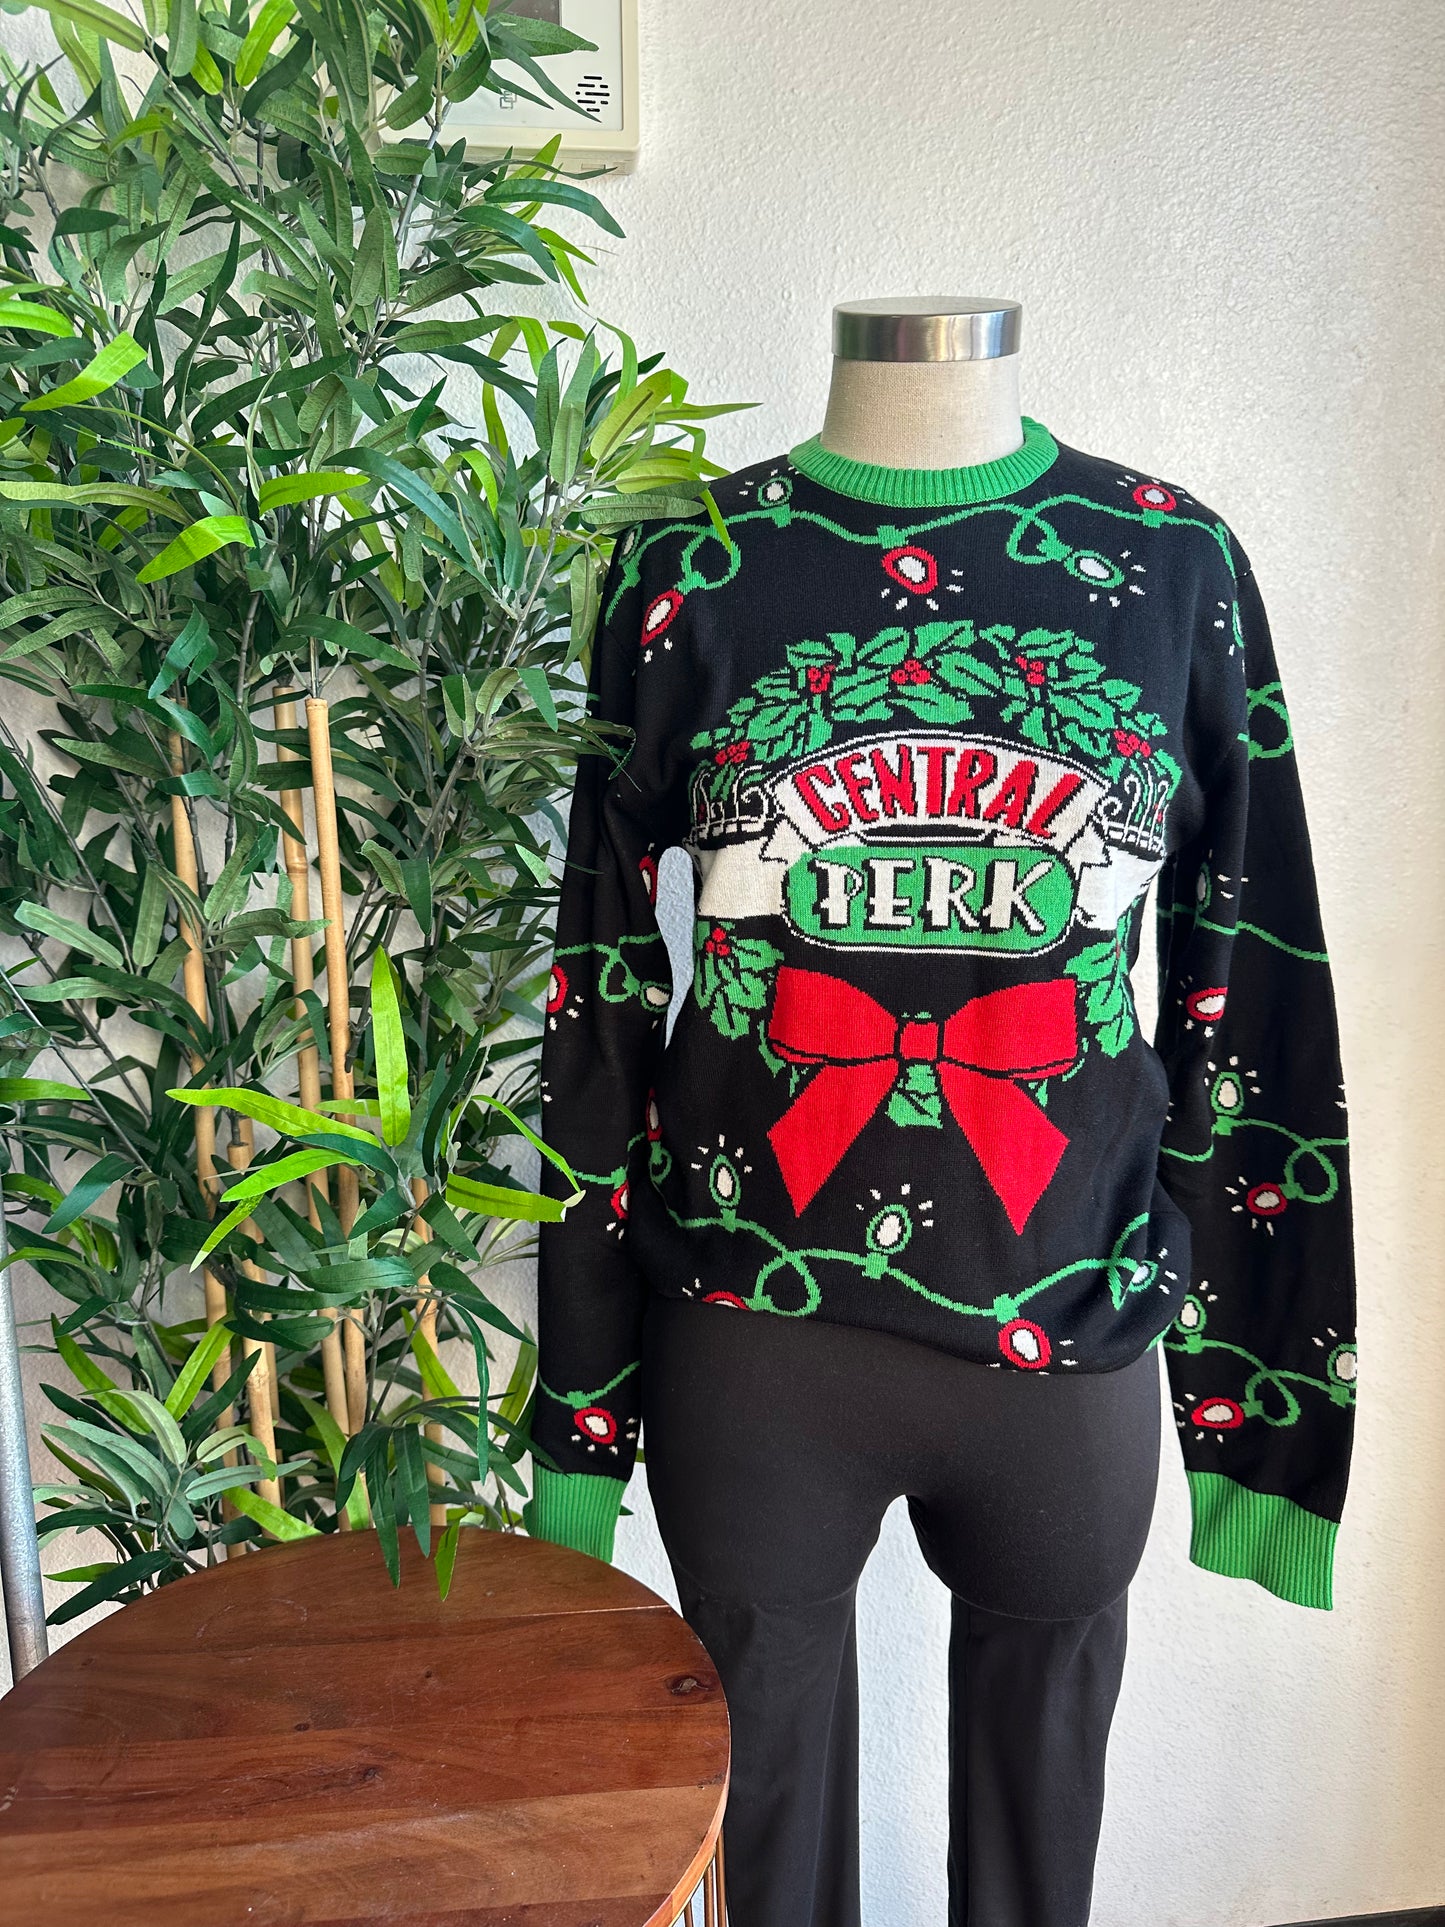 Central Perk Sweater